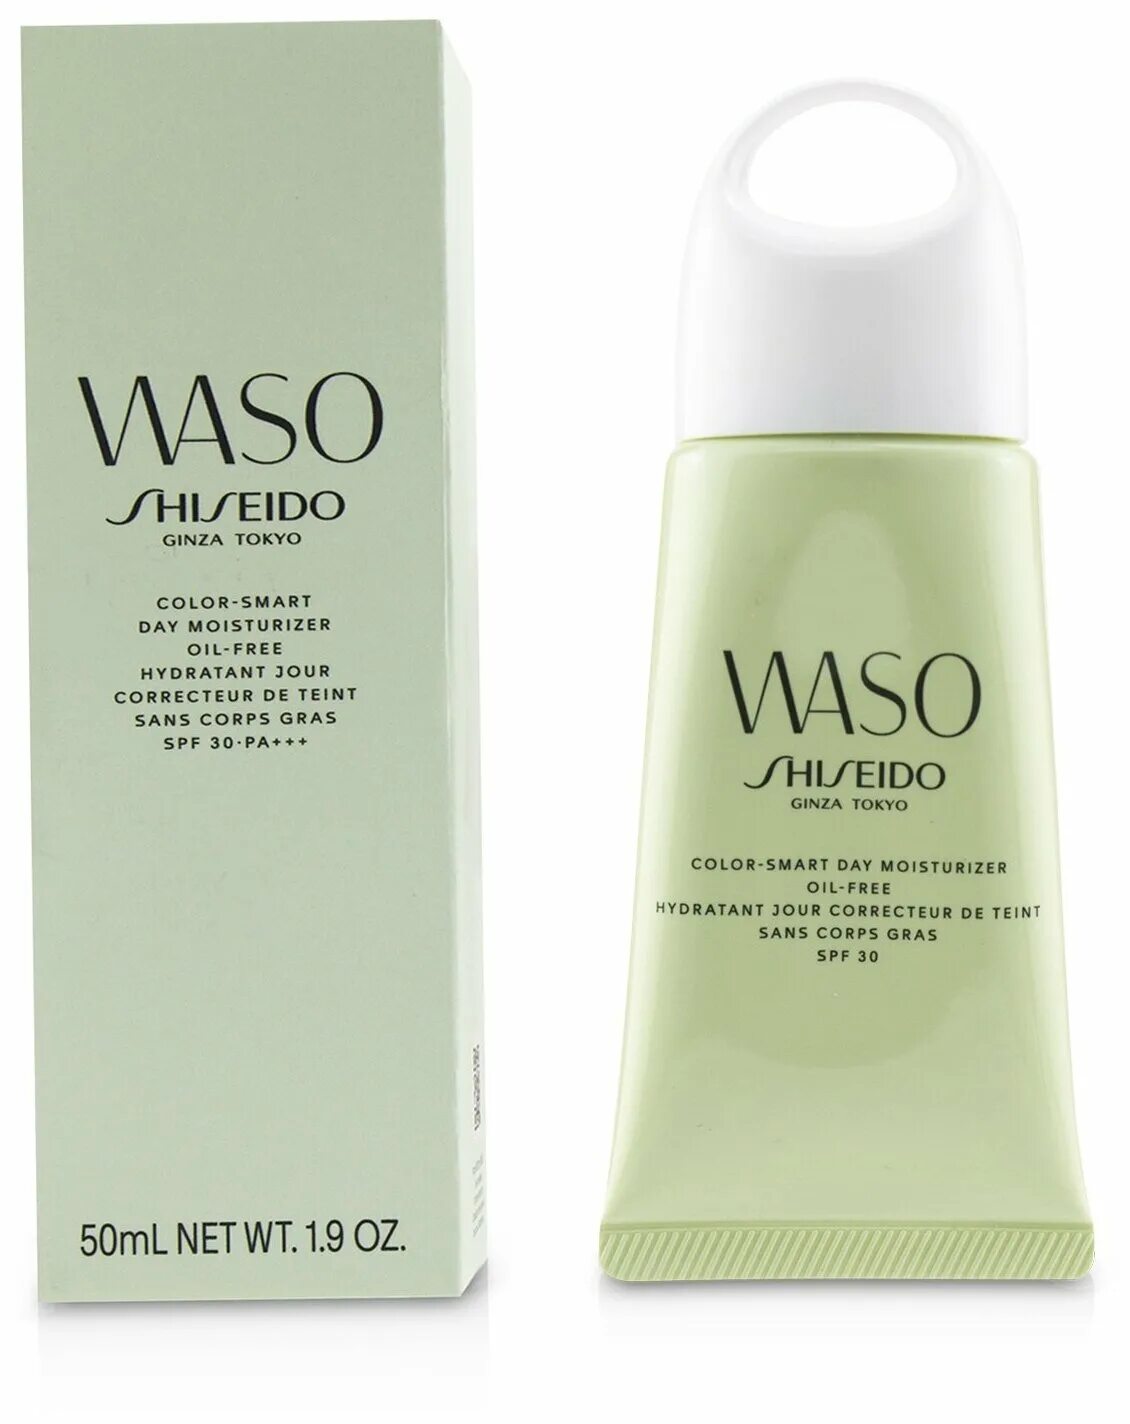 Moisturizer shiseido. Waso Shiseido Color Smart Day Moisturizer. Shiseido Waso Color-Smart Day Moisturizer SPF 30. Shiseido Waso Smart Cream.